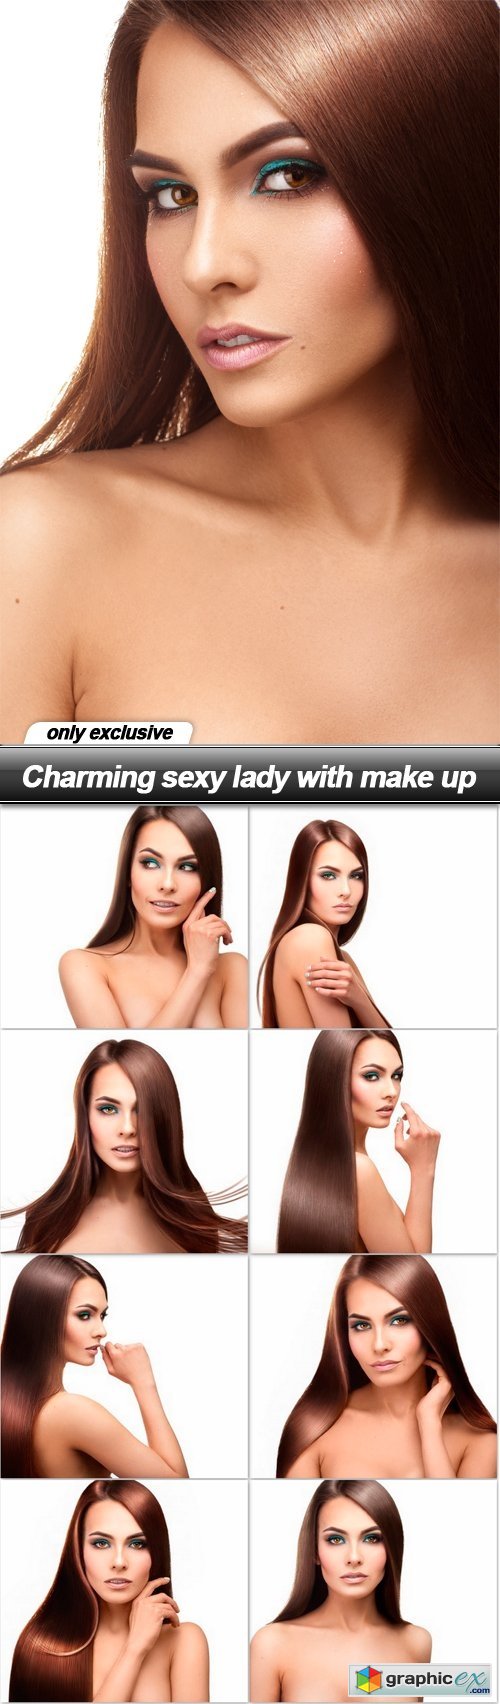 Charming sexy lady with make up - 9 UHQ JPEG